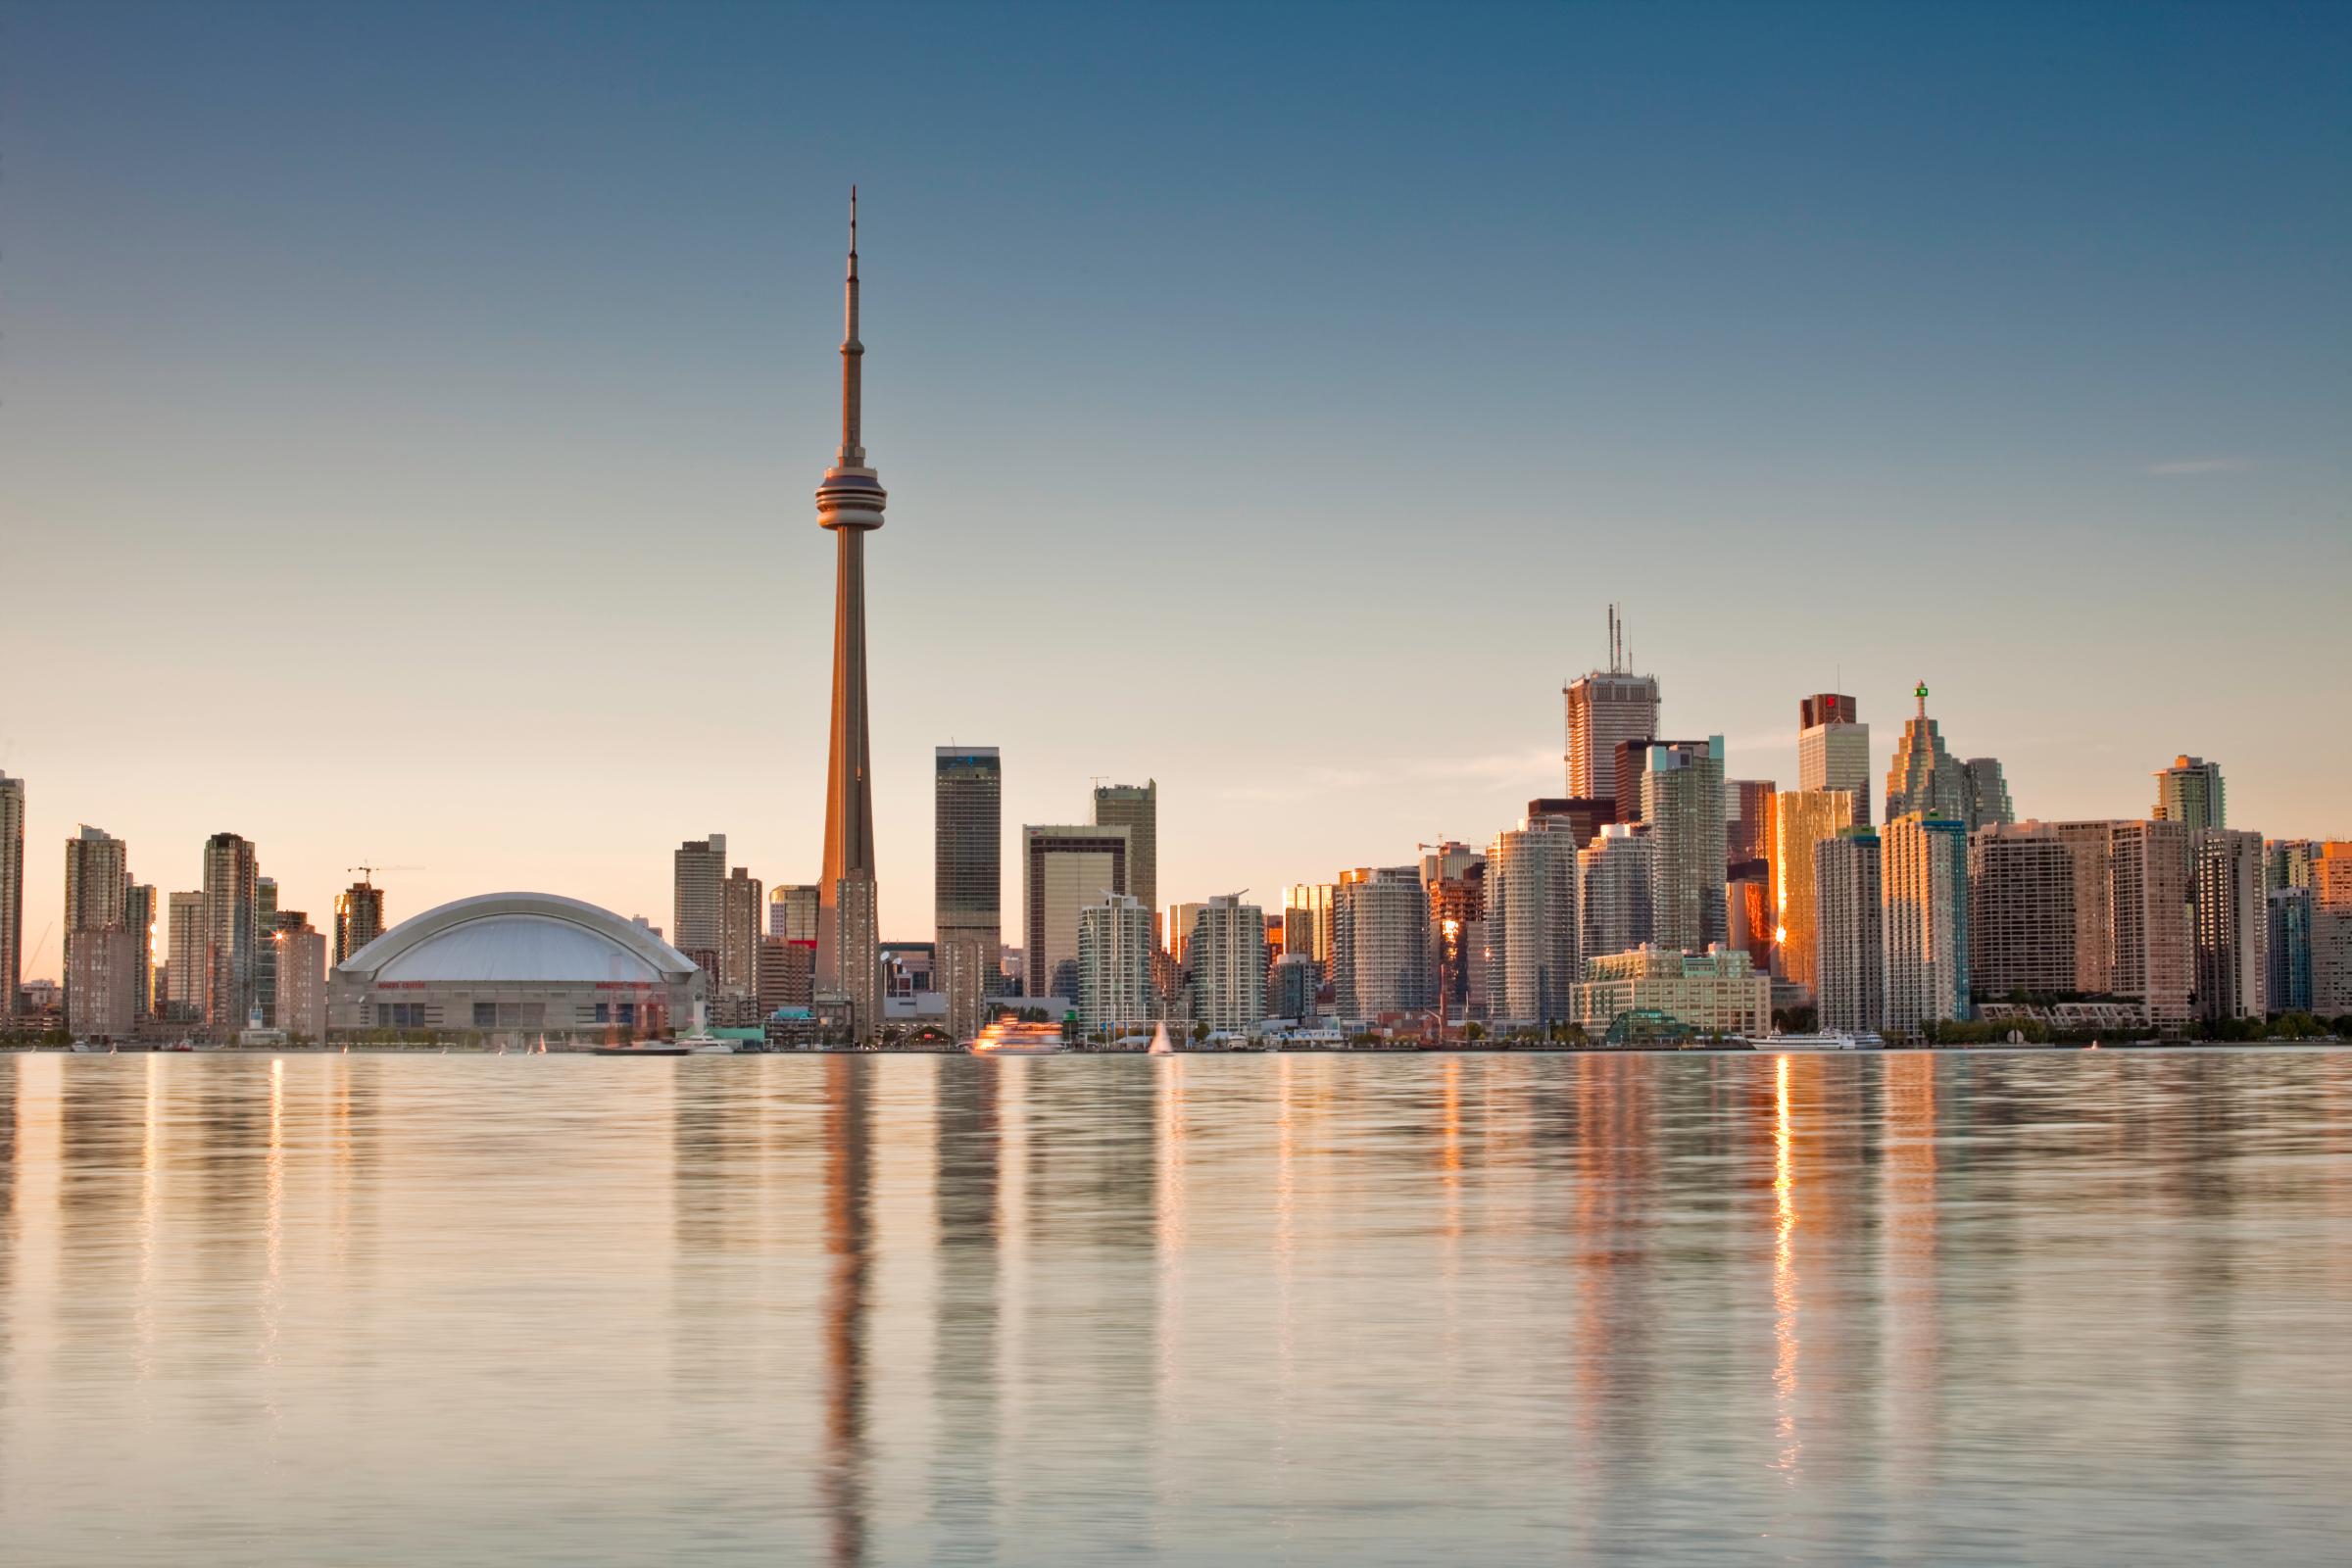 View of the Toronto skyline